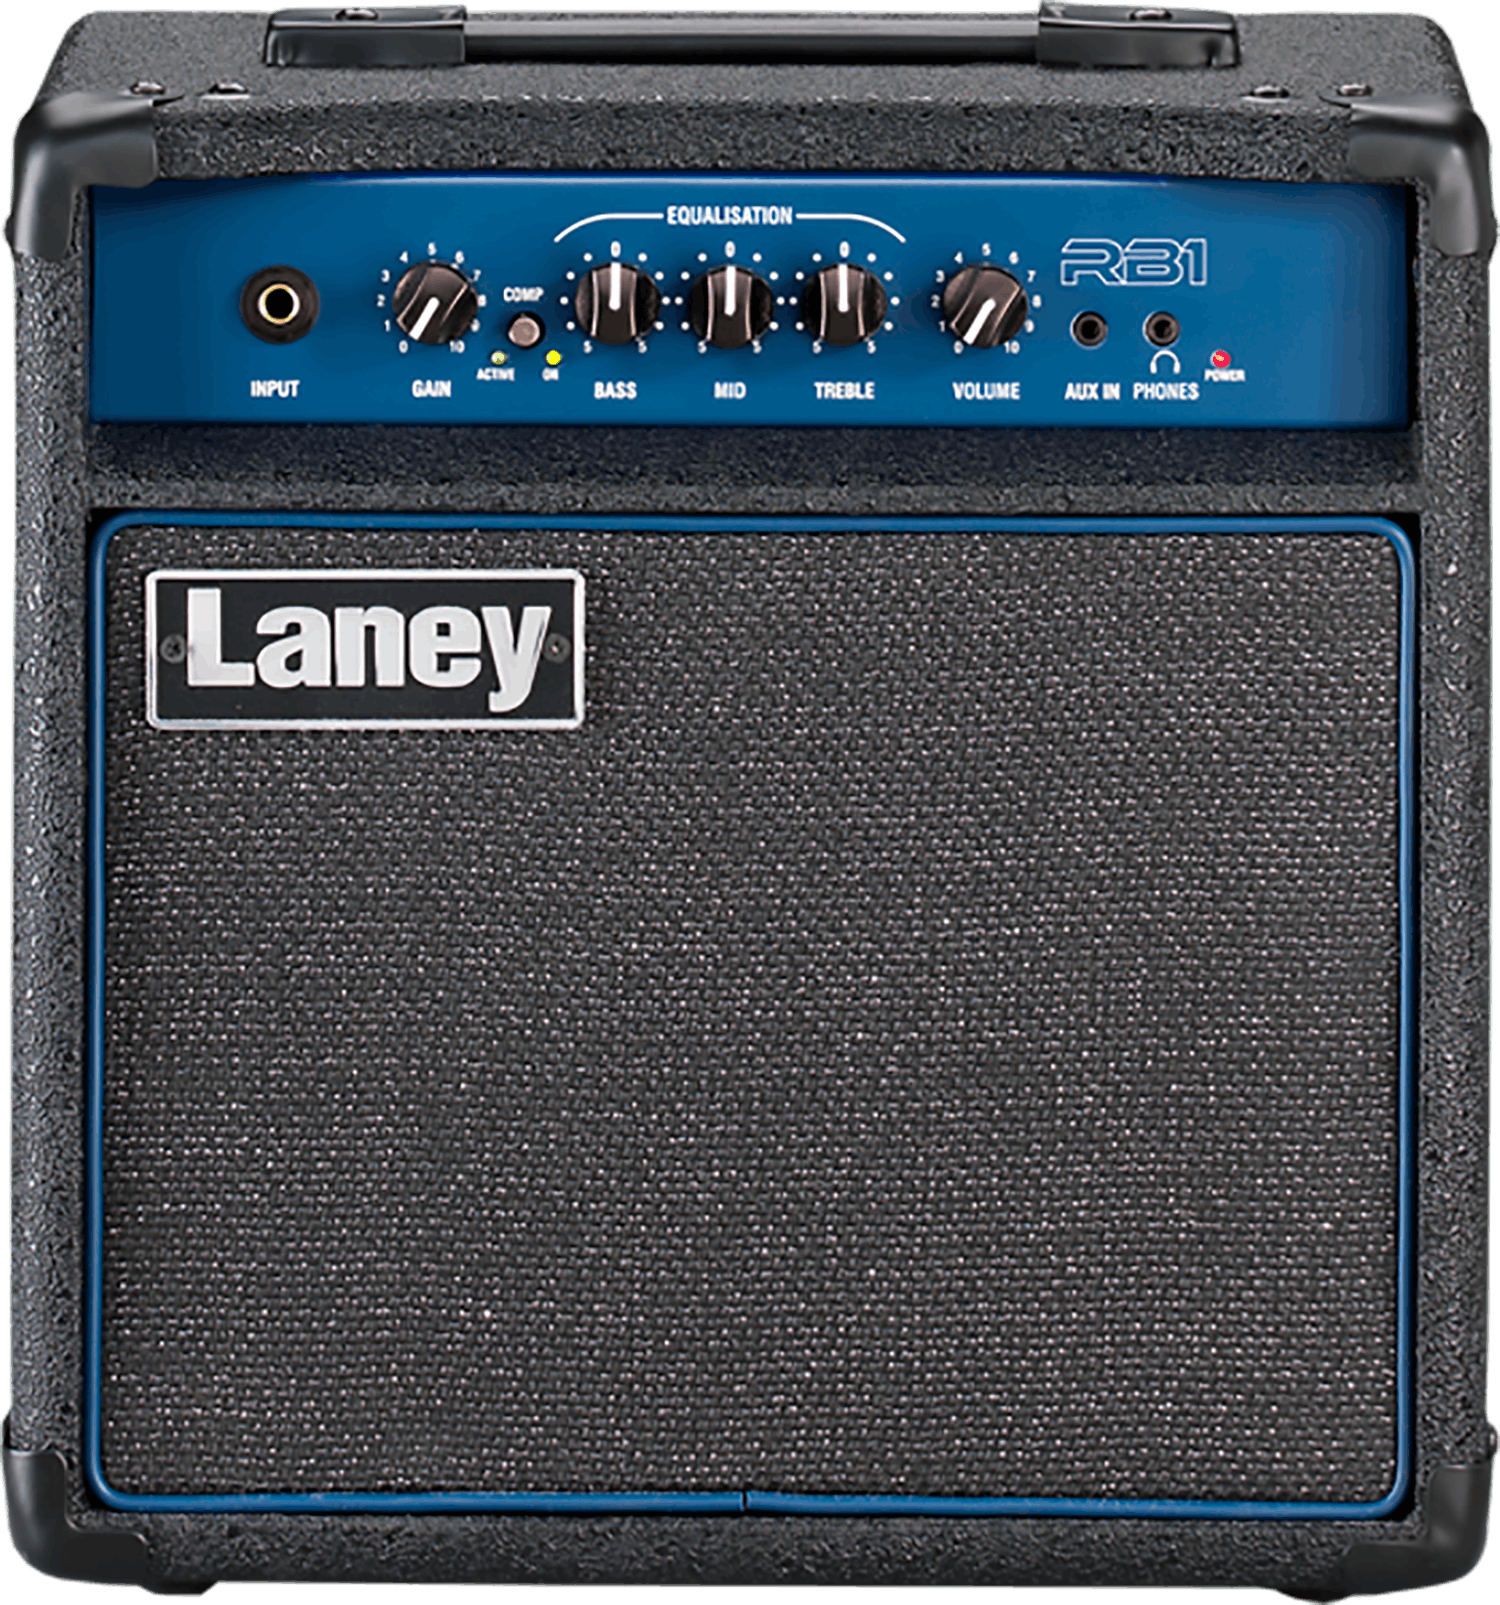 Laney - Combo Bajo Electrico Richter, 15 W 1 x 8 Mod.RB1_124